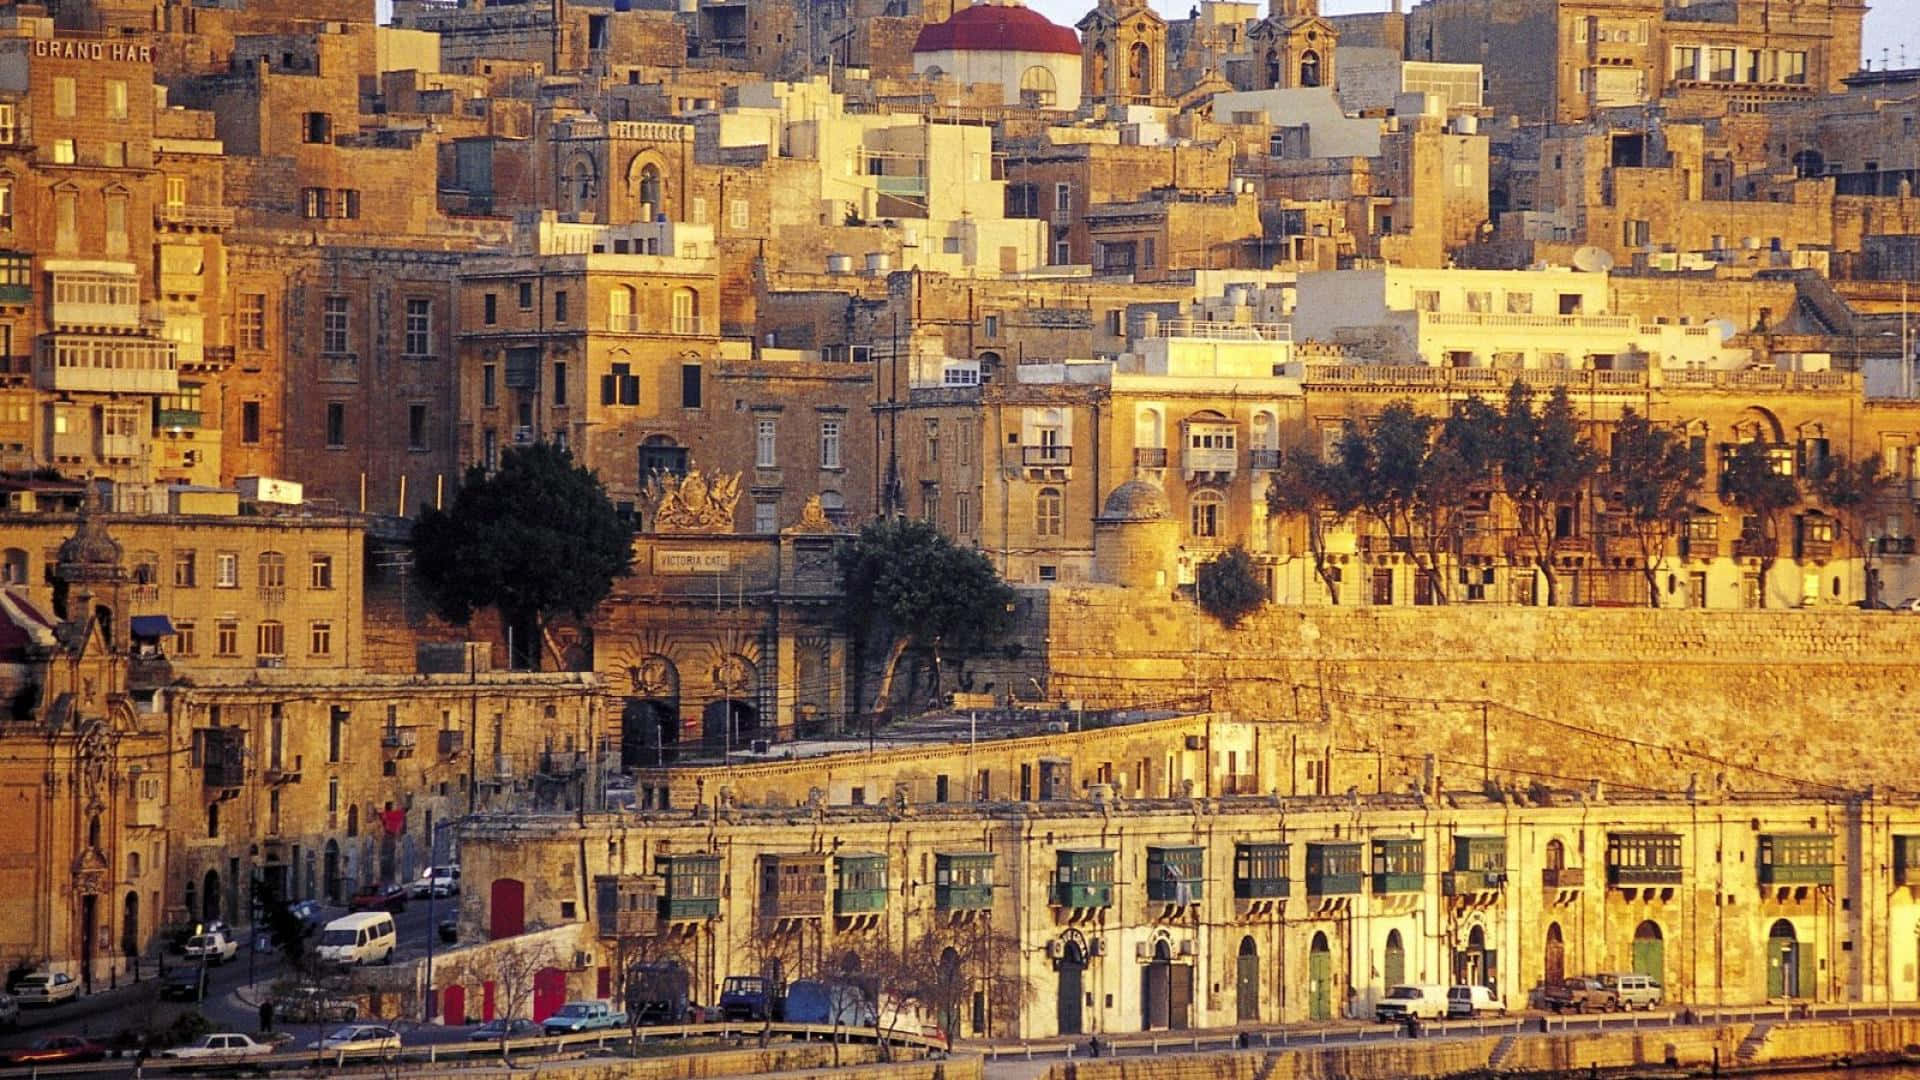 Scenic view of the beautiful island of Malta